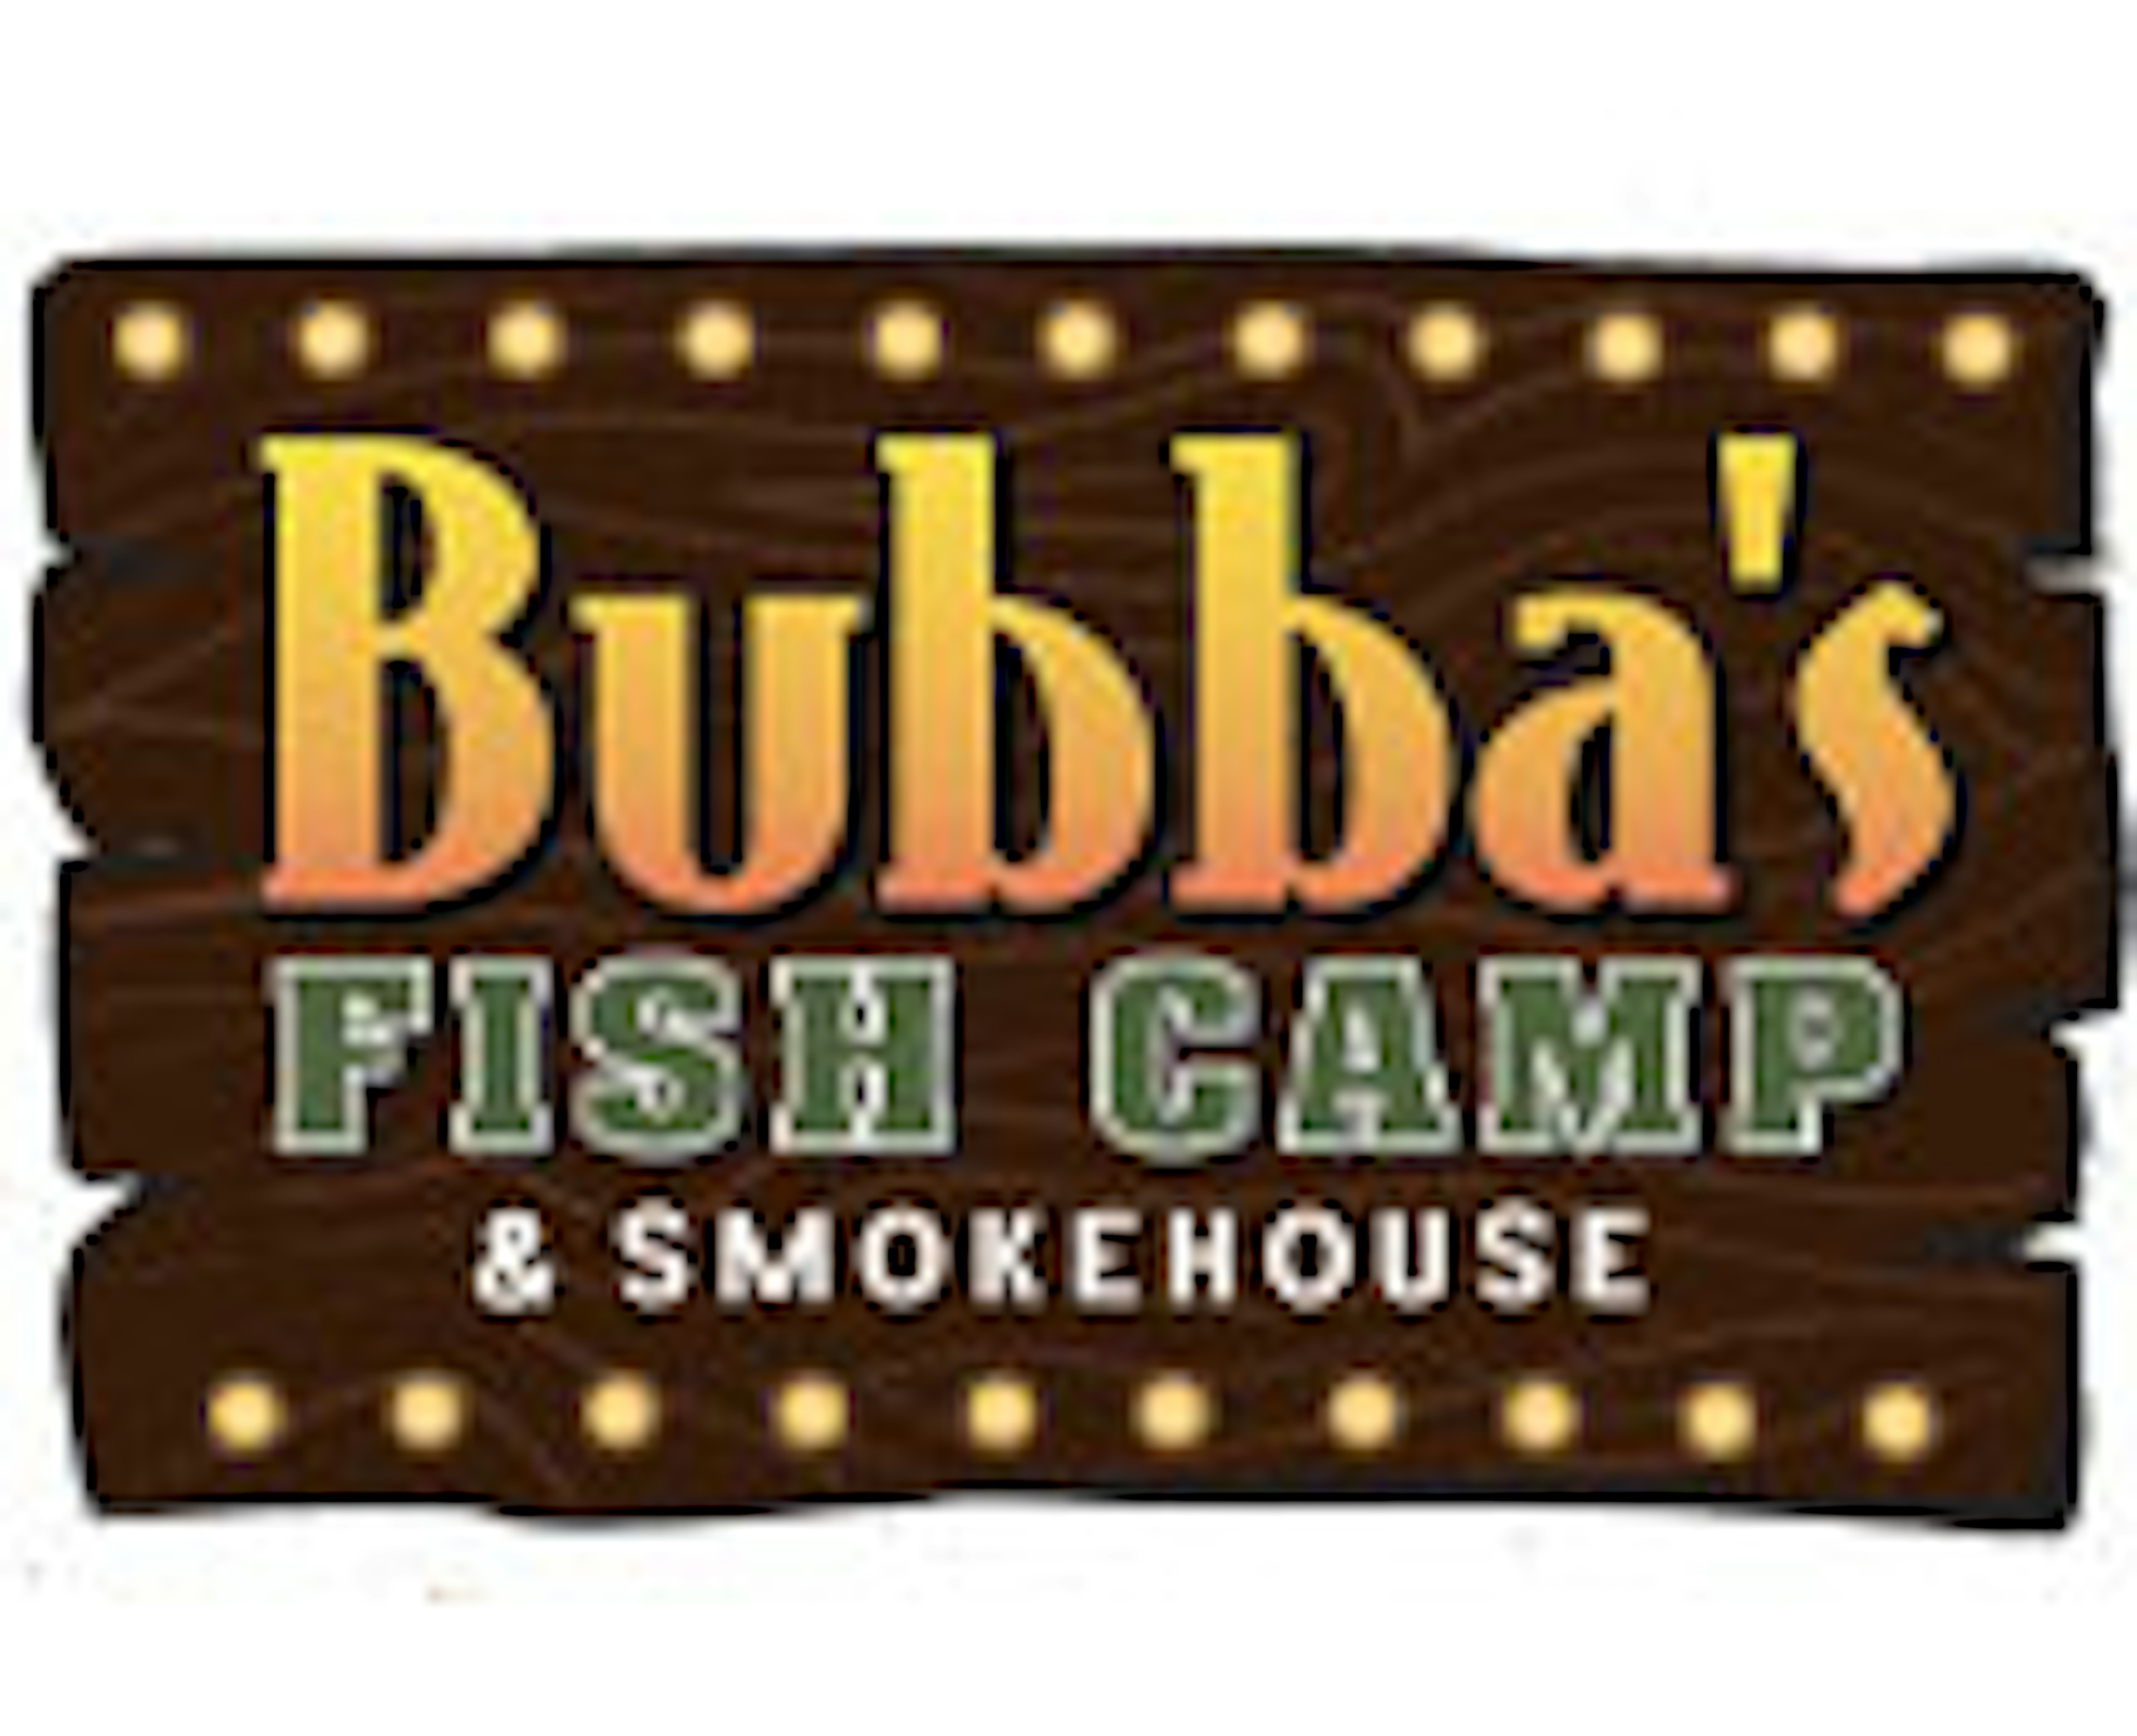 Bubba’s Fish Camp & Smokehouse